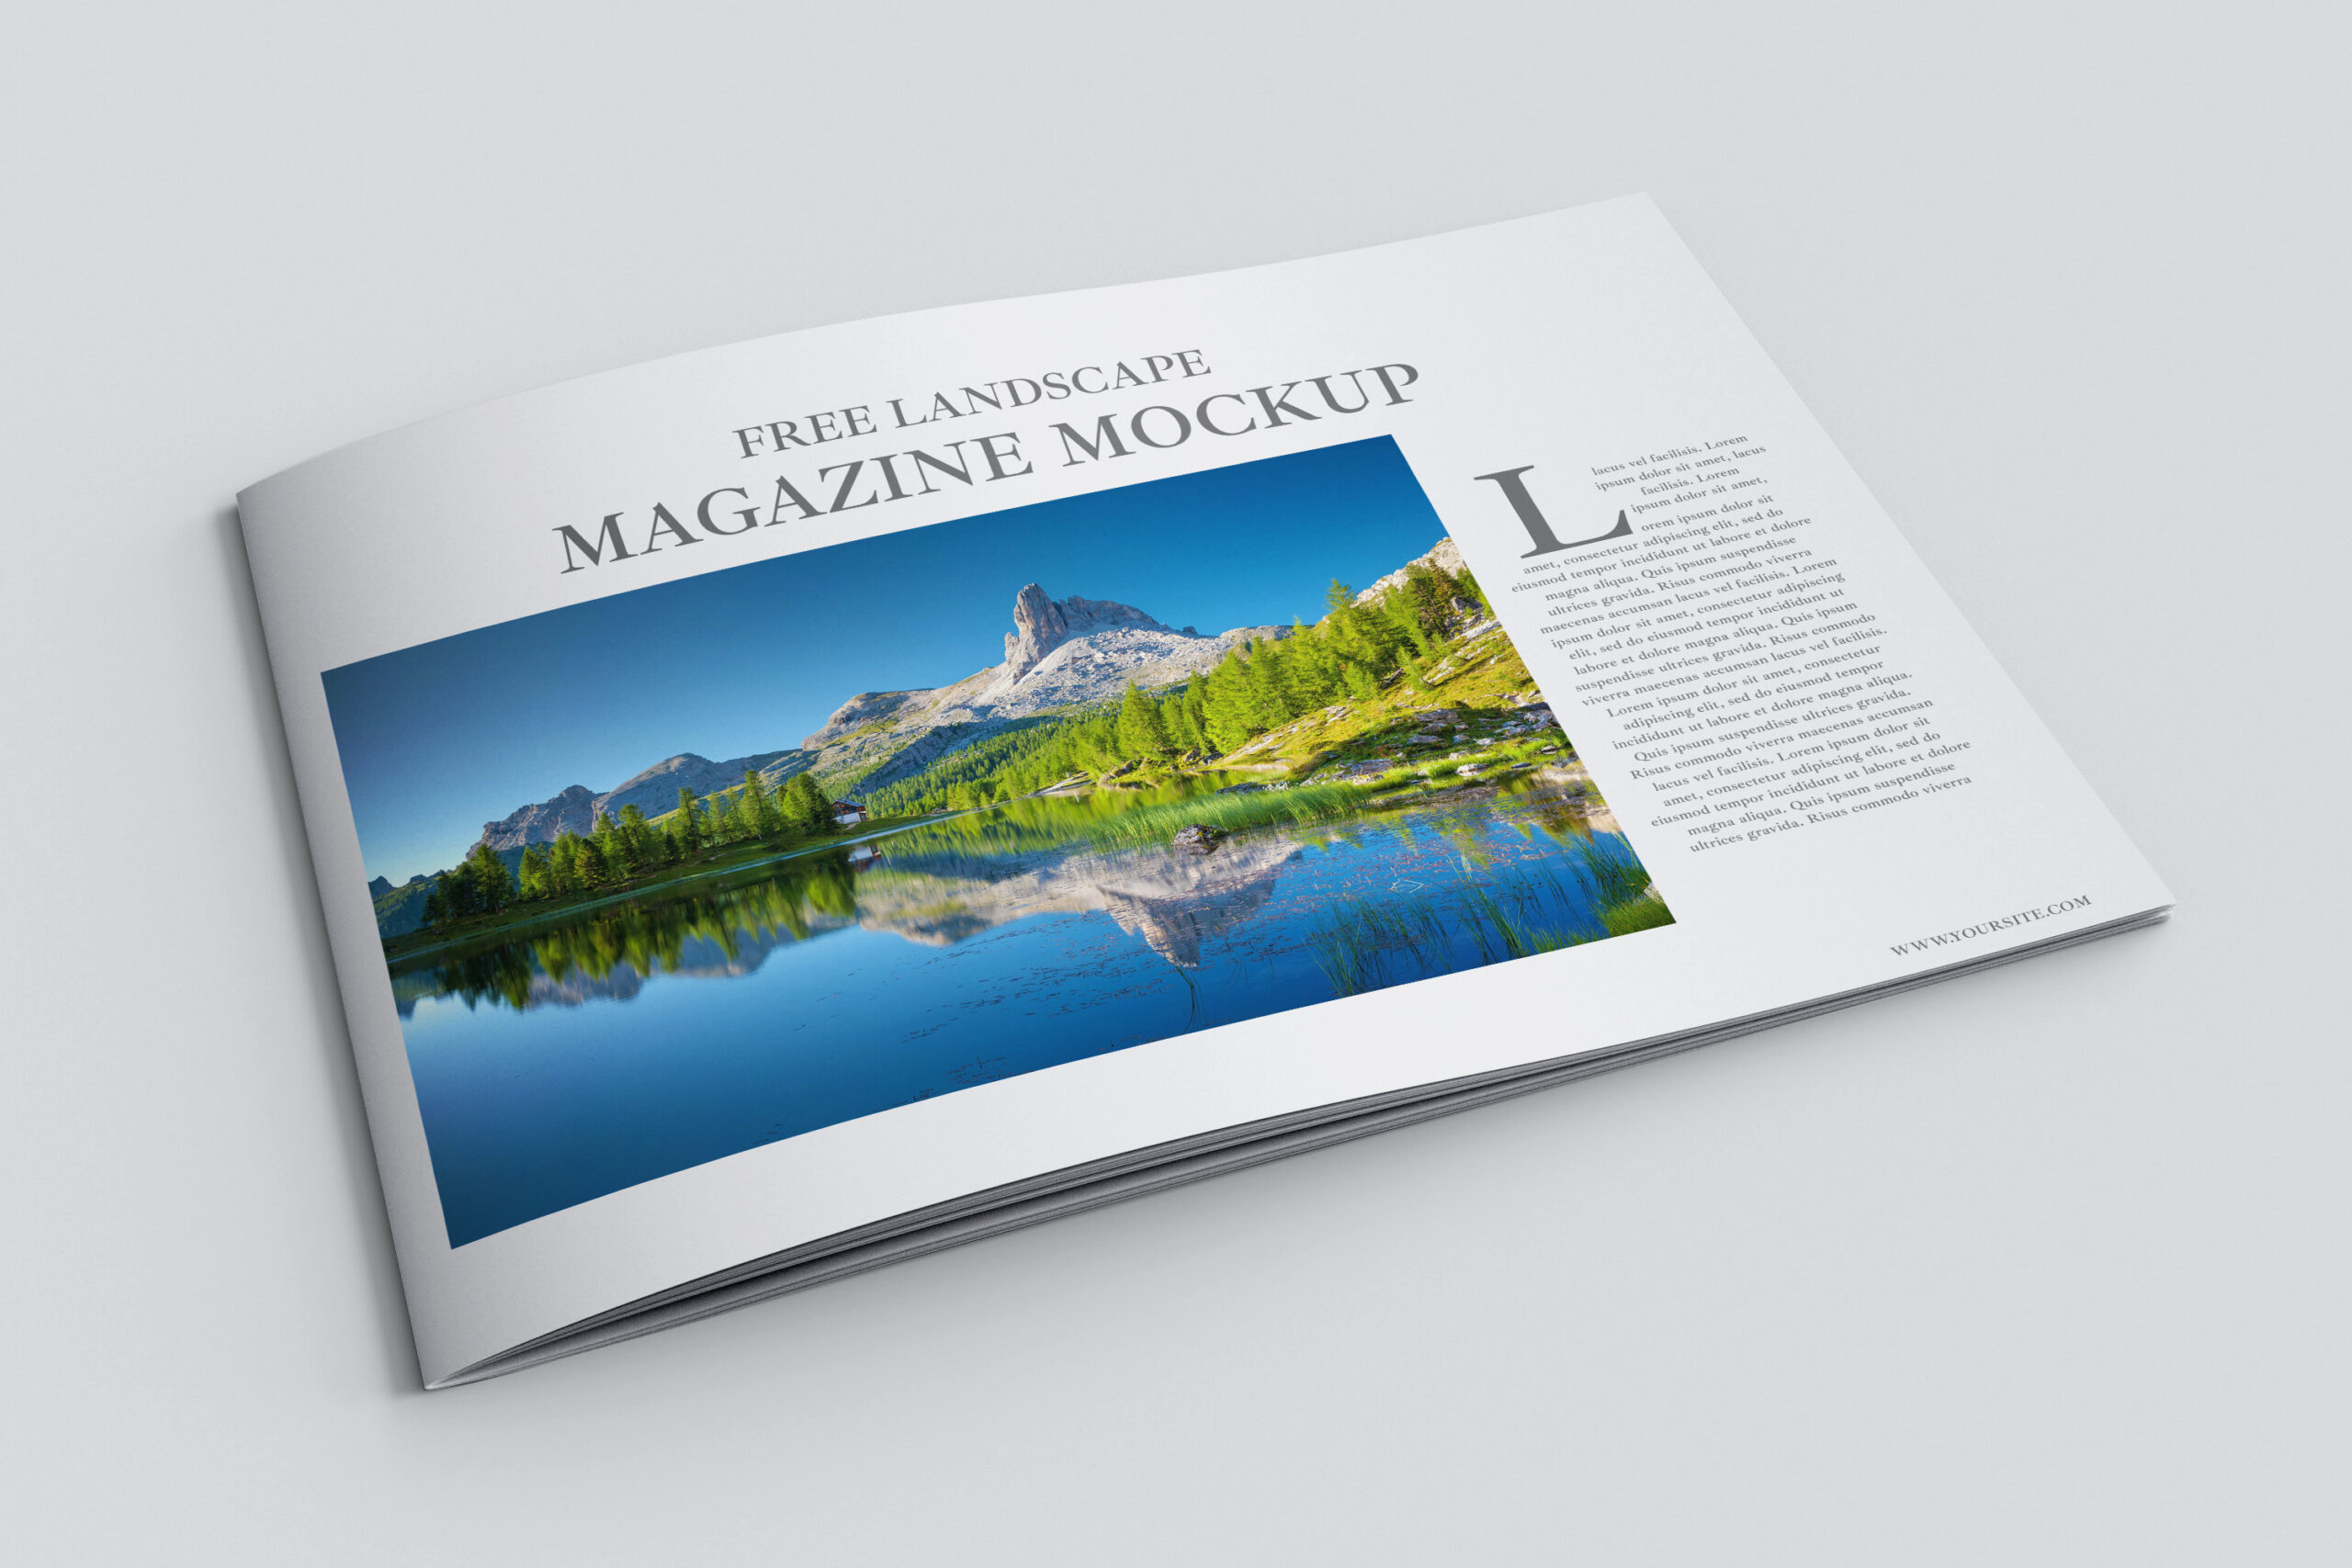 Landscape Magazine Mockup Templates Free PSD Download